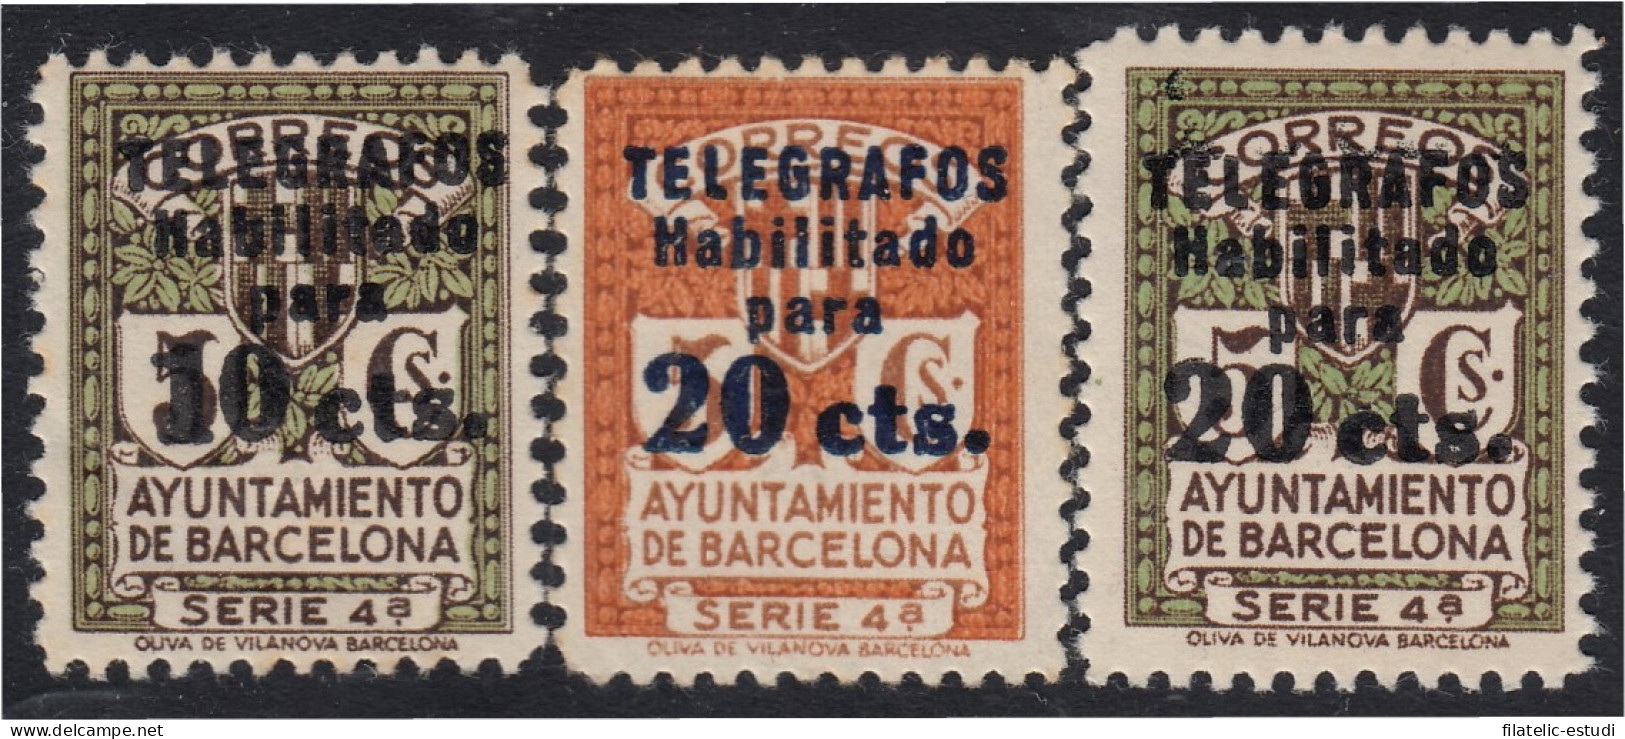 Barcelona Telégrafos 10/12 1936-38 Ayuntamiento De Barcelona MNH - Barcelone